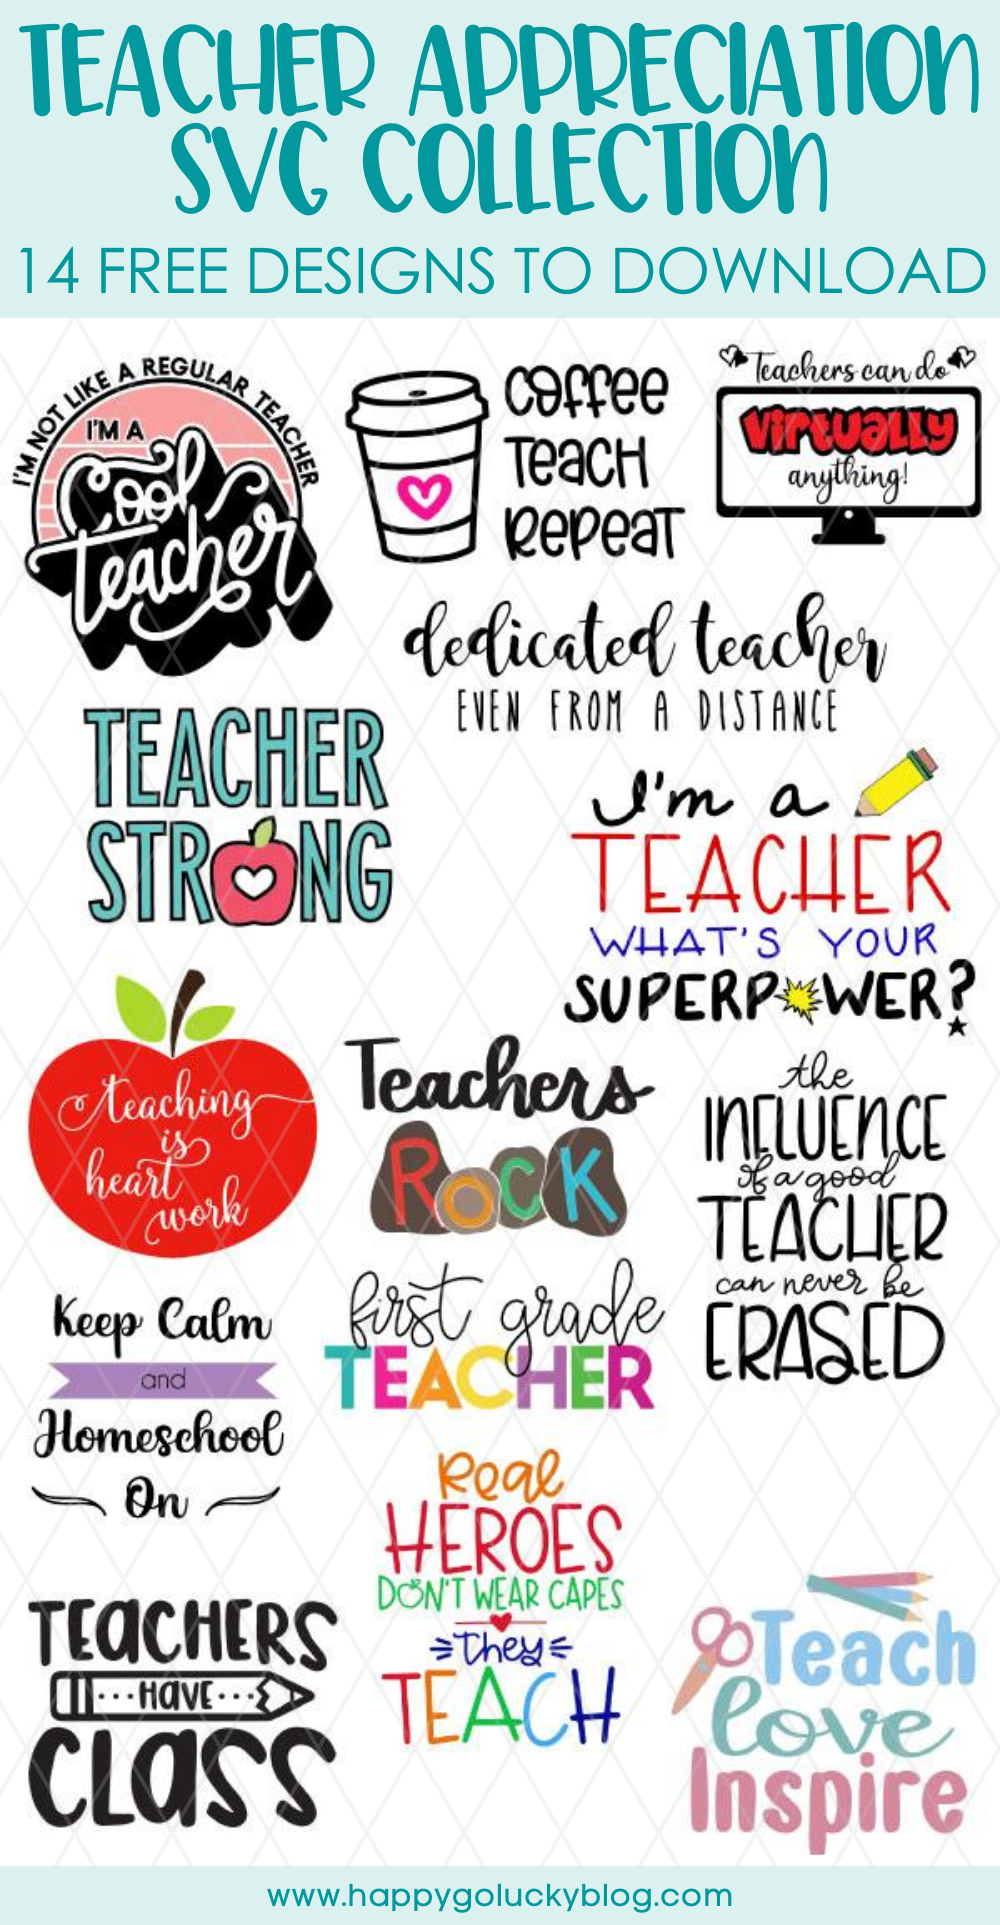 https://www.happygoluckyblog.com/wp-content/uploads/2020/08/Free-Teacher-Appreciation-SVG-Collection-1.png